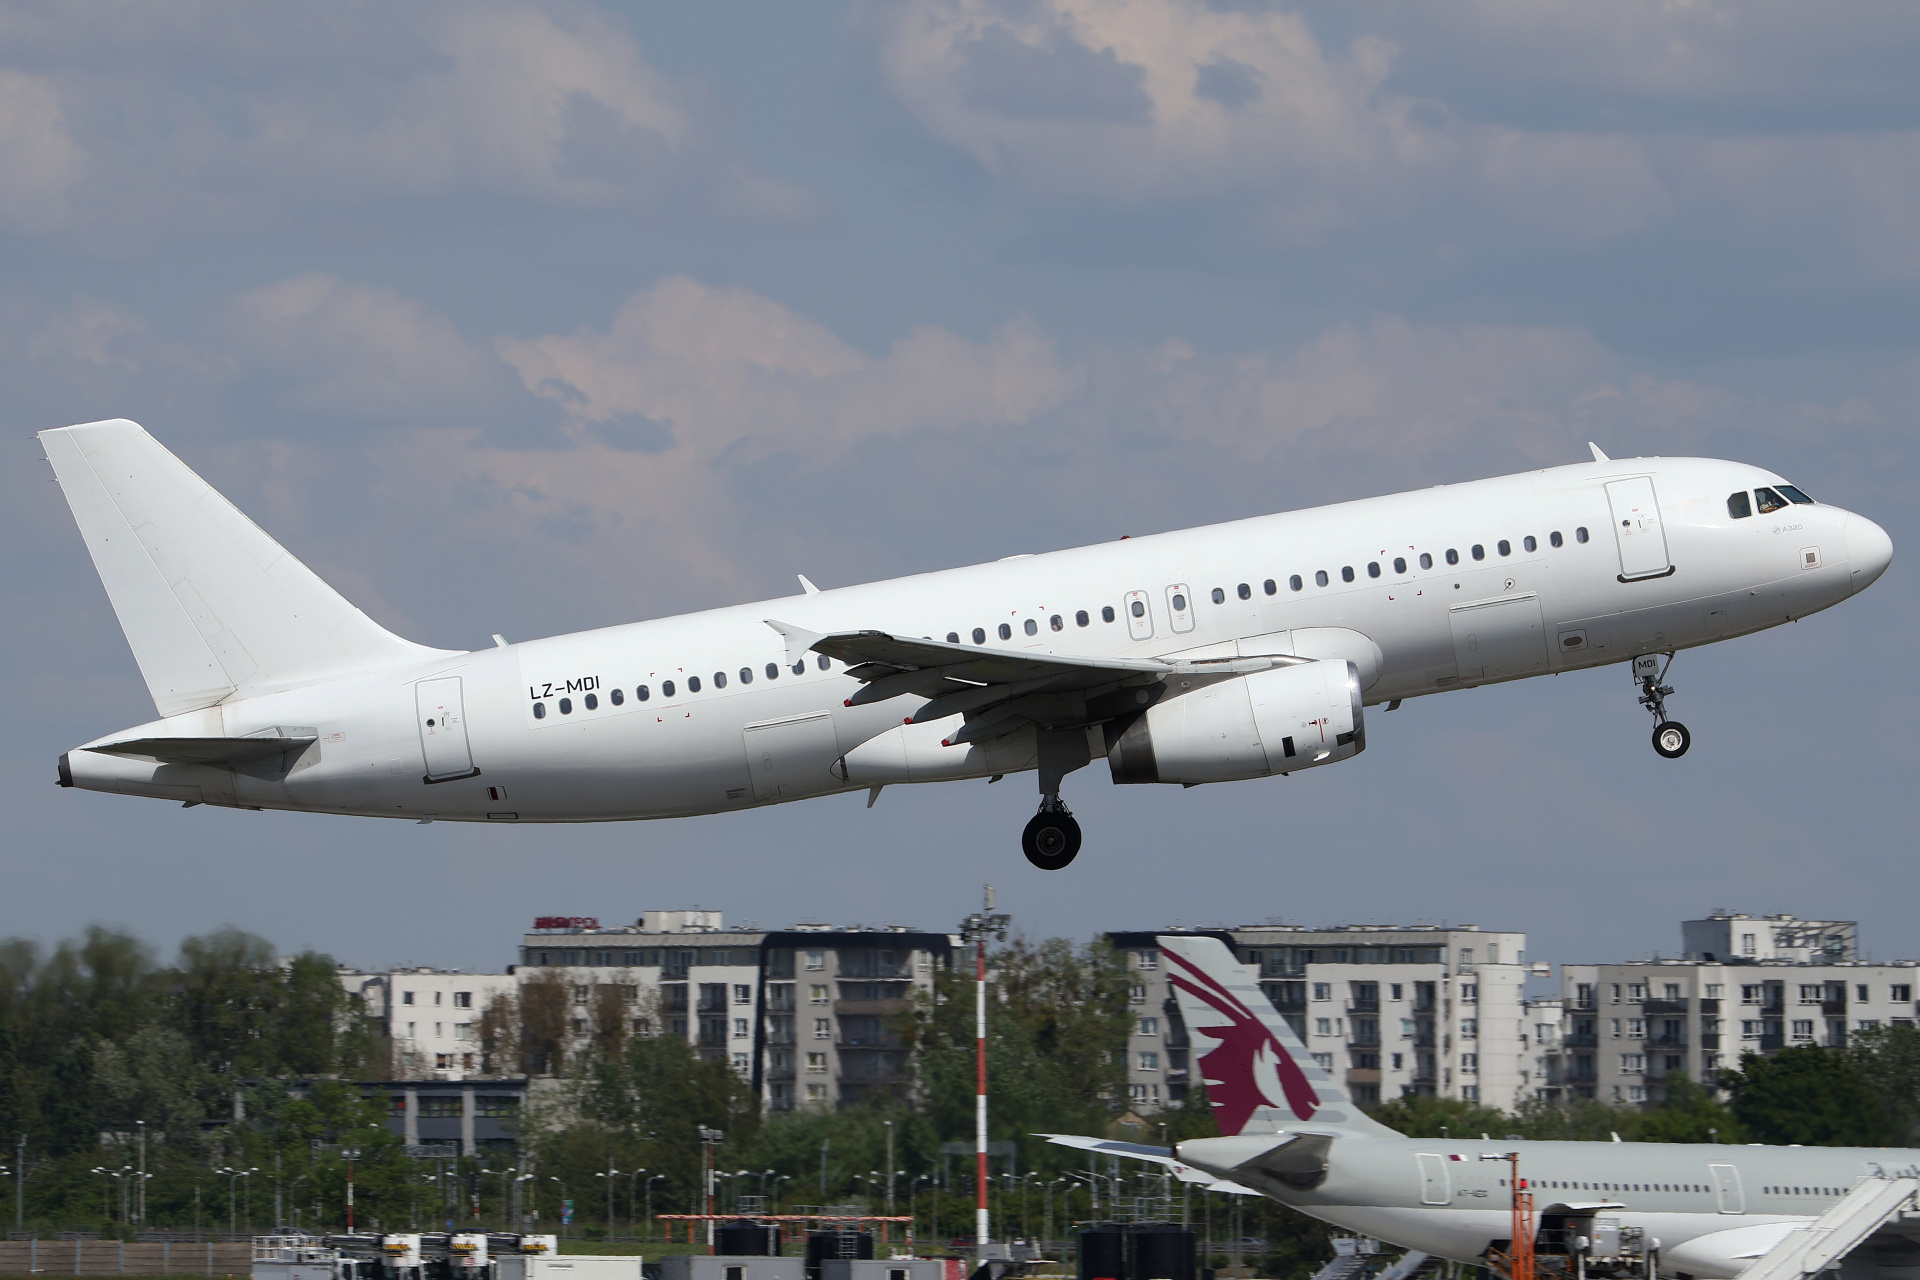 LZ-MDI, Fly2Sky (Aircraft » EPWA Spotting » Airbus A320-200)